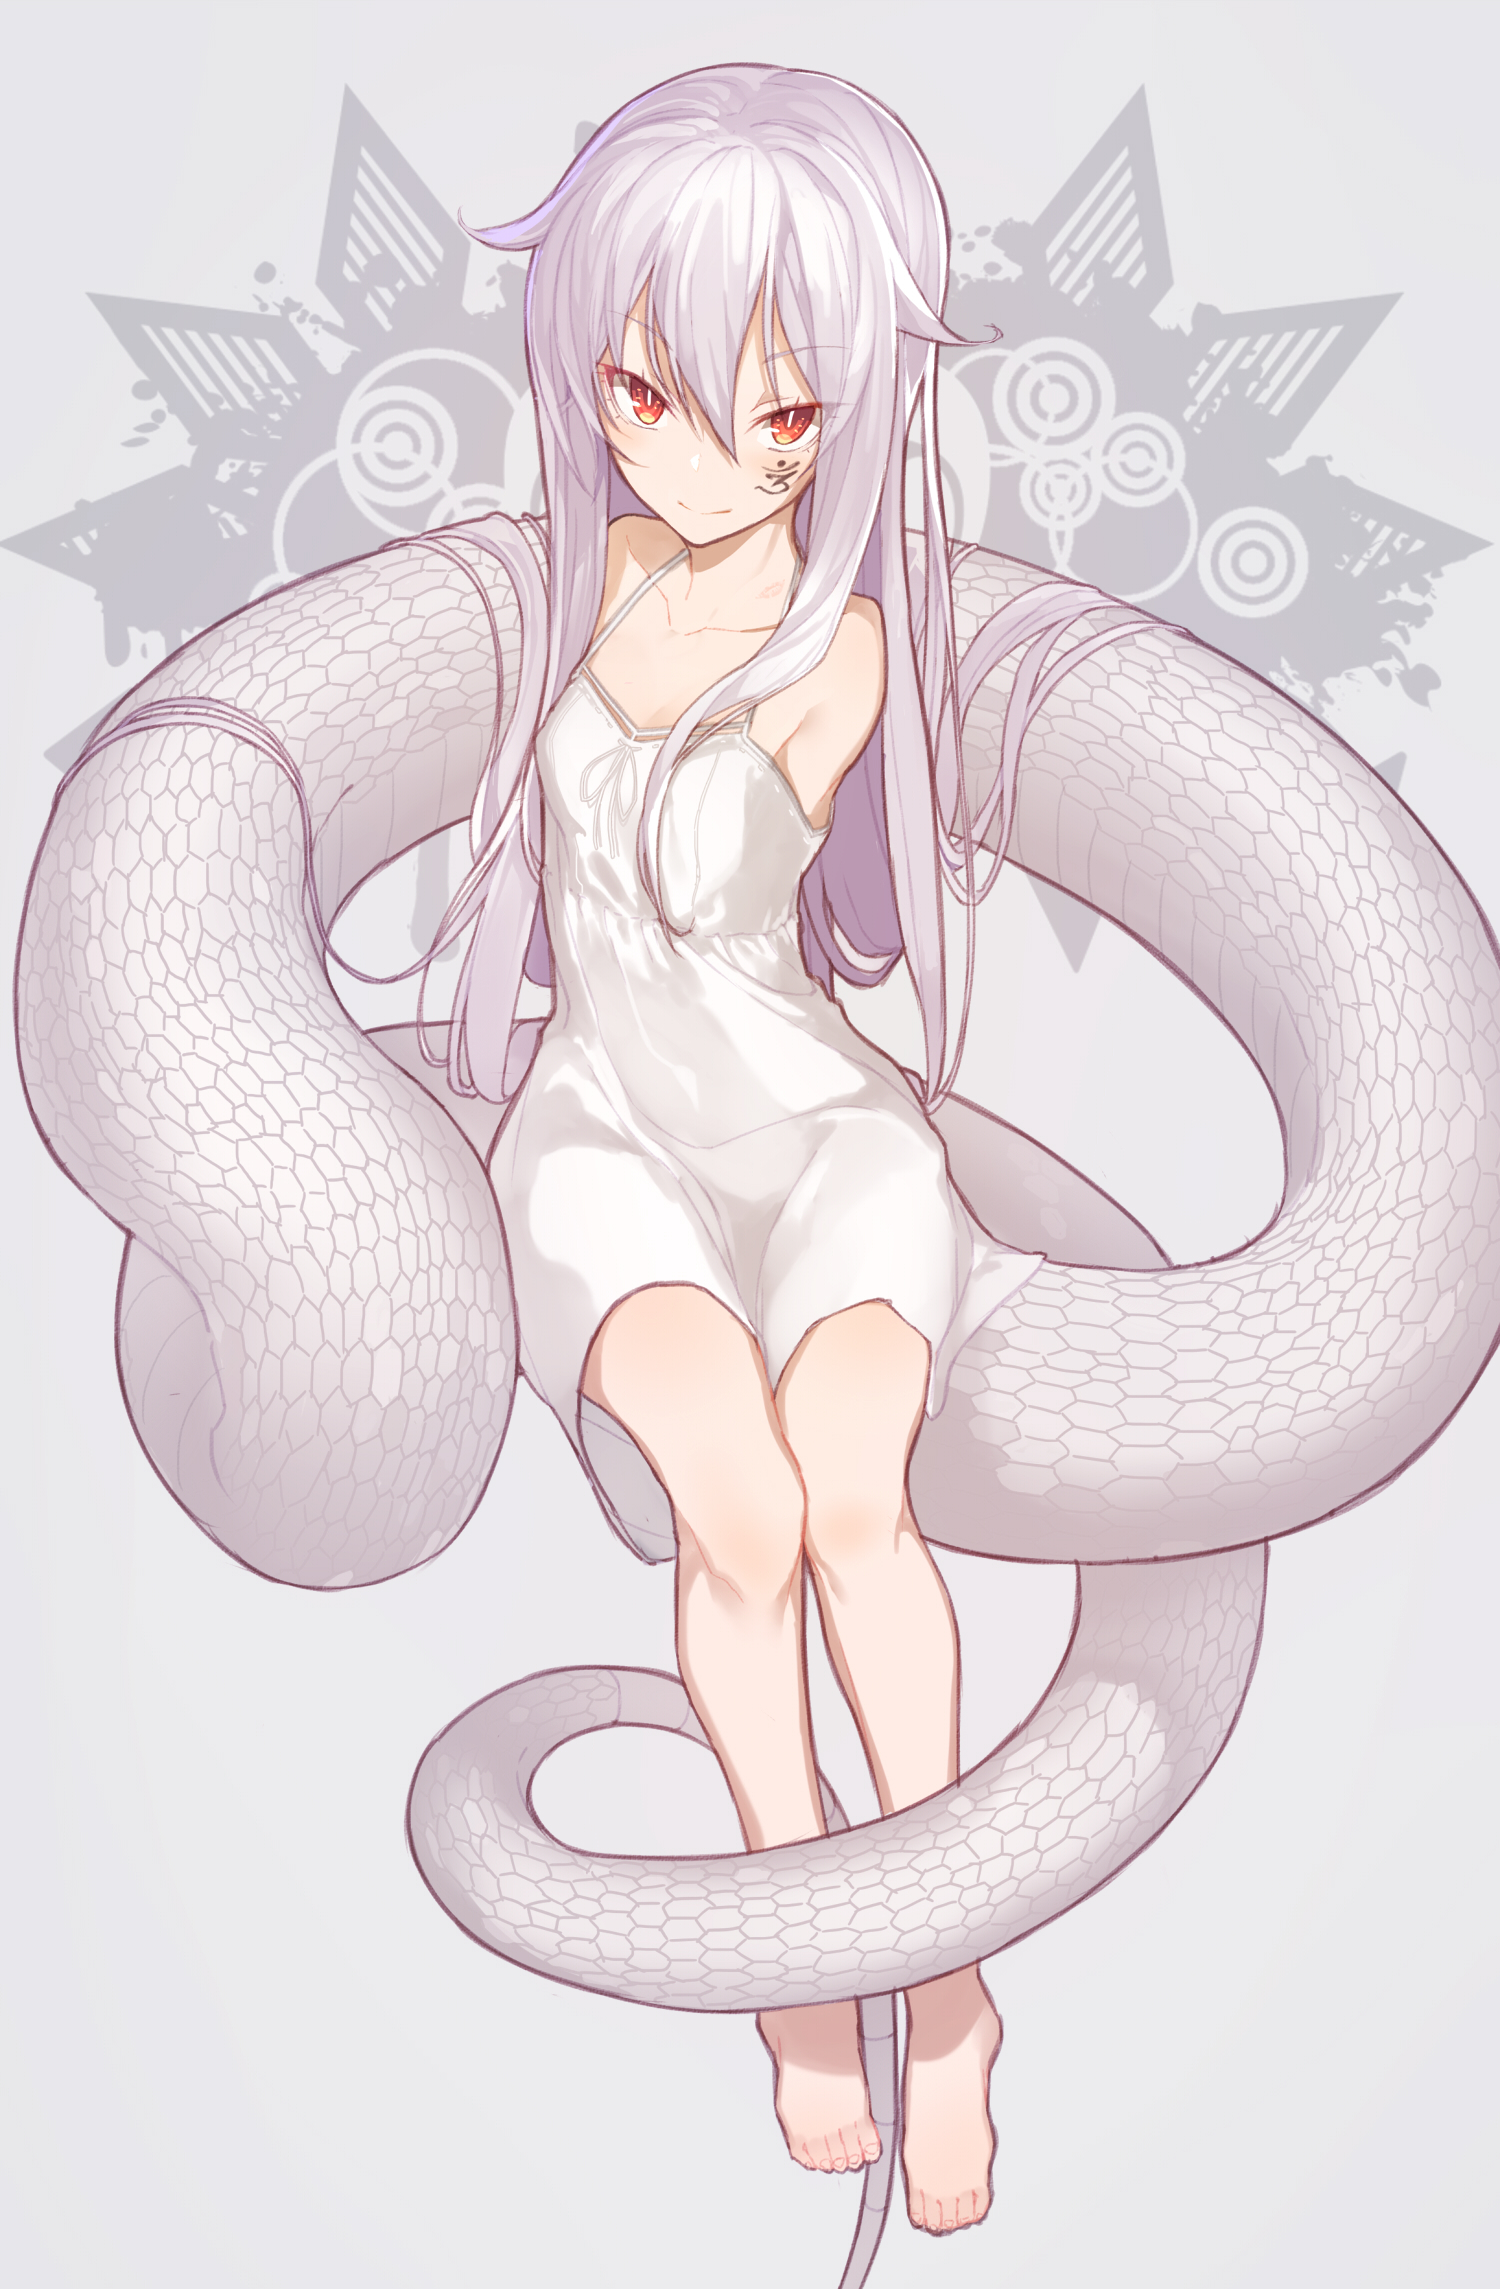 White Snake  Other  Anime Background Wallpapers on Desktop Nexus Image  2538005